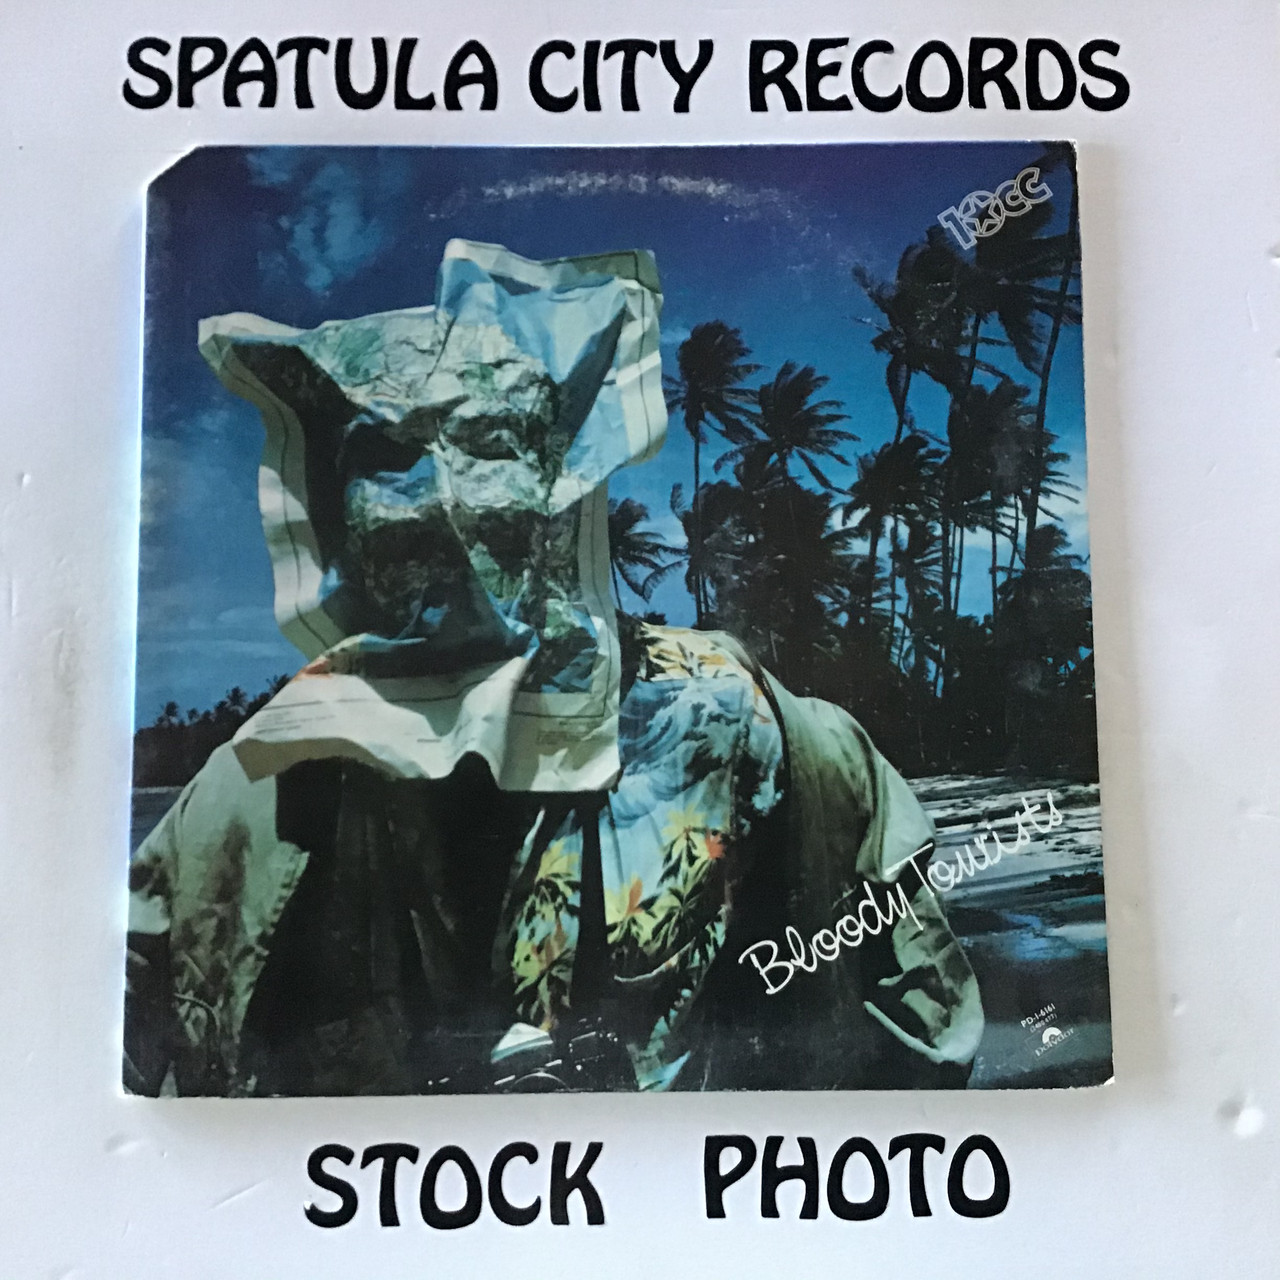 10cc - Bloody Tourists - vinyl record LP